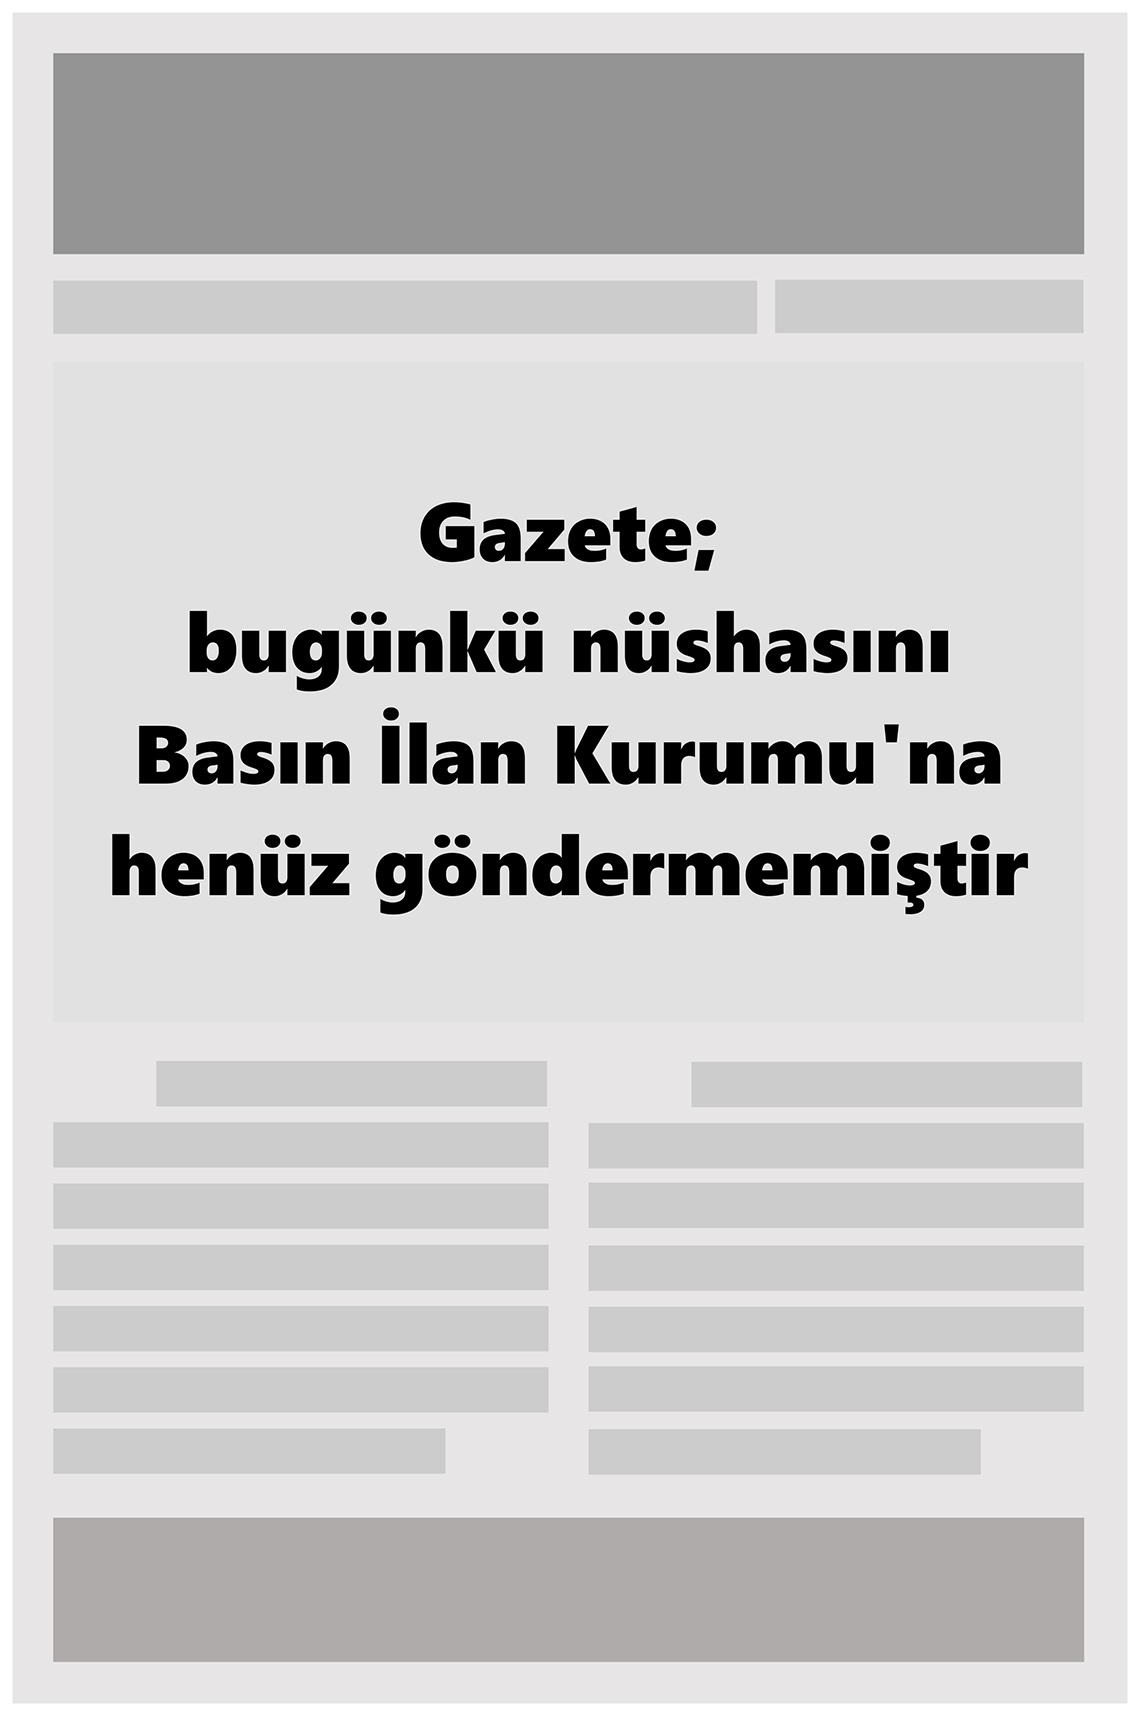 15 Ocak 2022 Erzincan Taraf 24 Gazete Manşeti